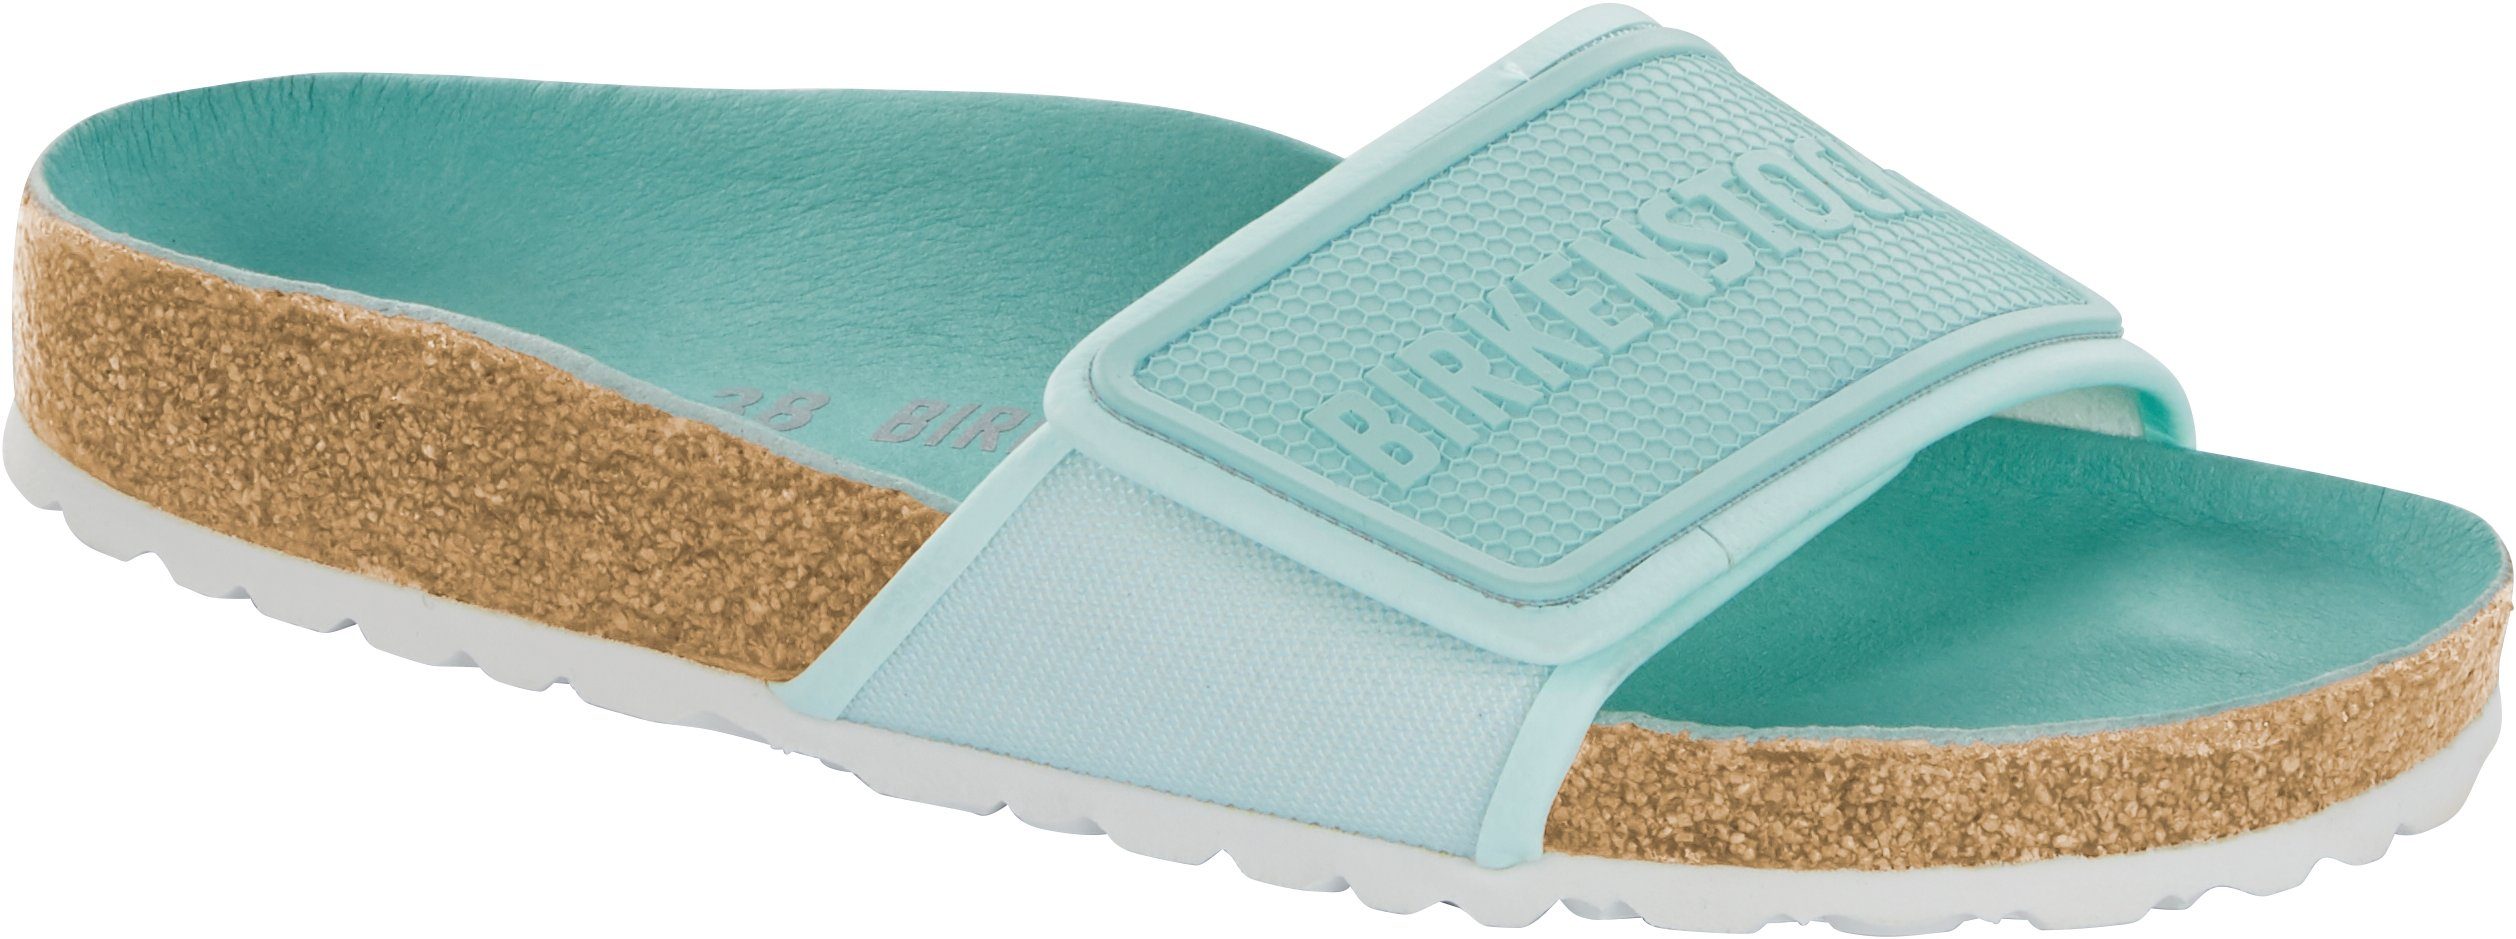 Birkenstock »Birkenstock Tema turquoise 1013217« Pantolette online kaufen |  OTTO